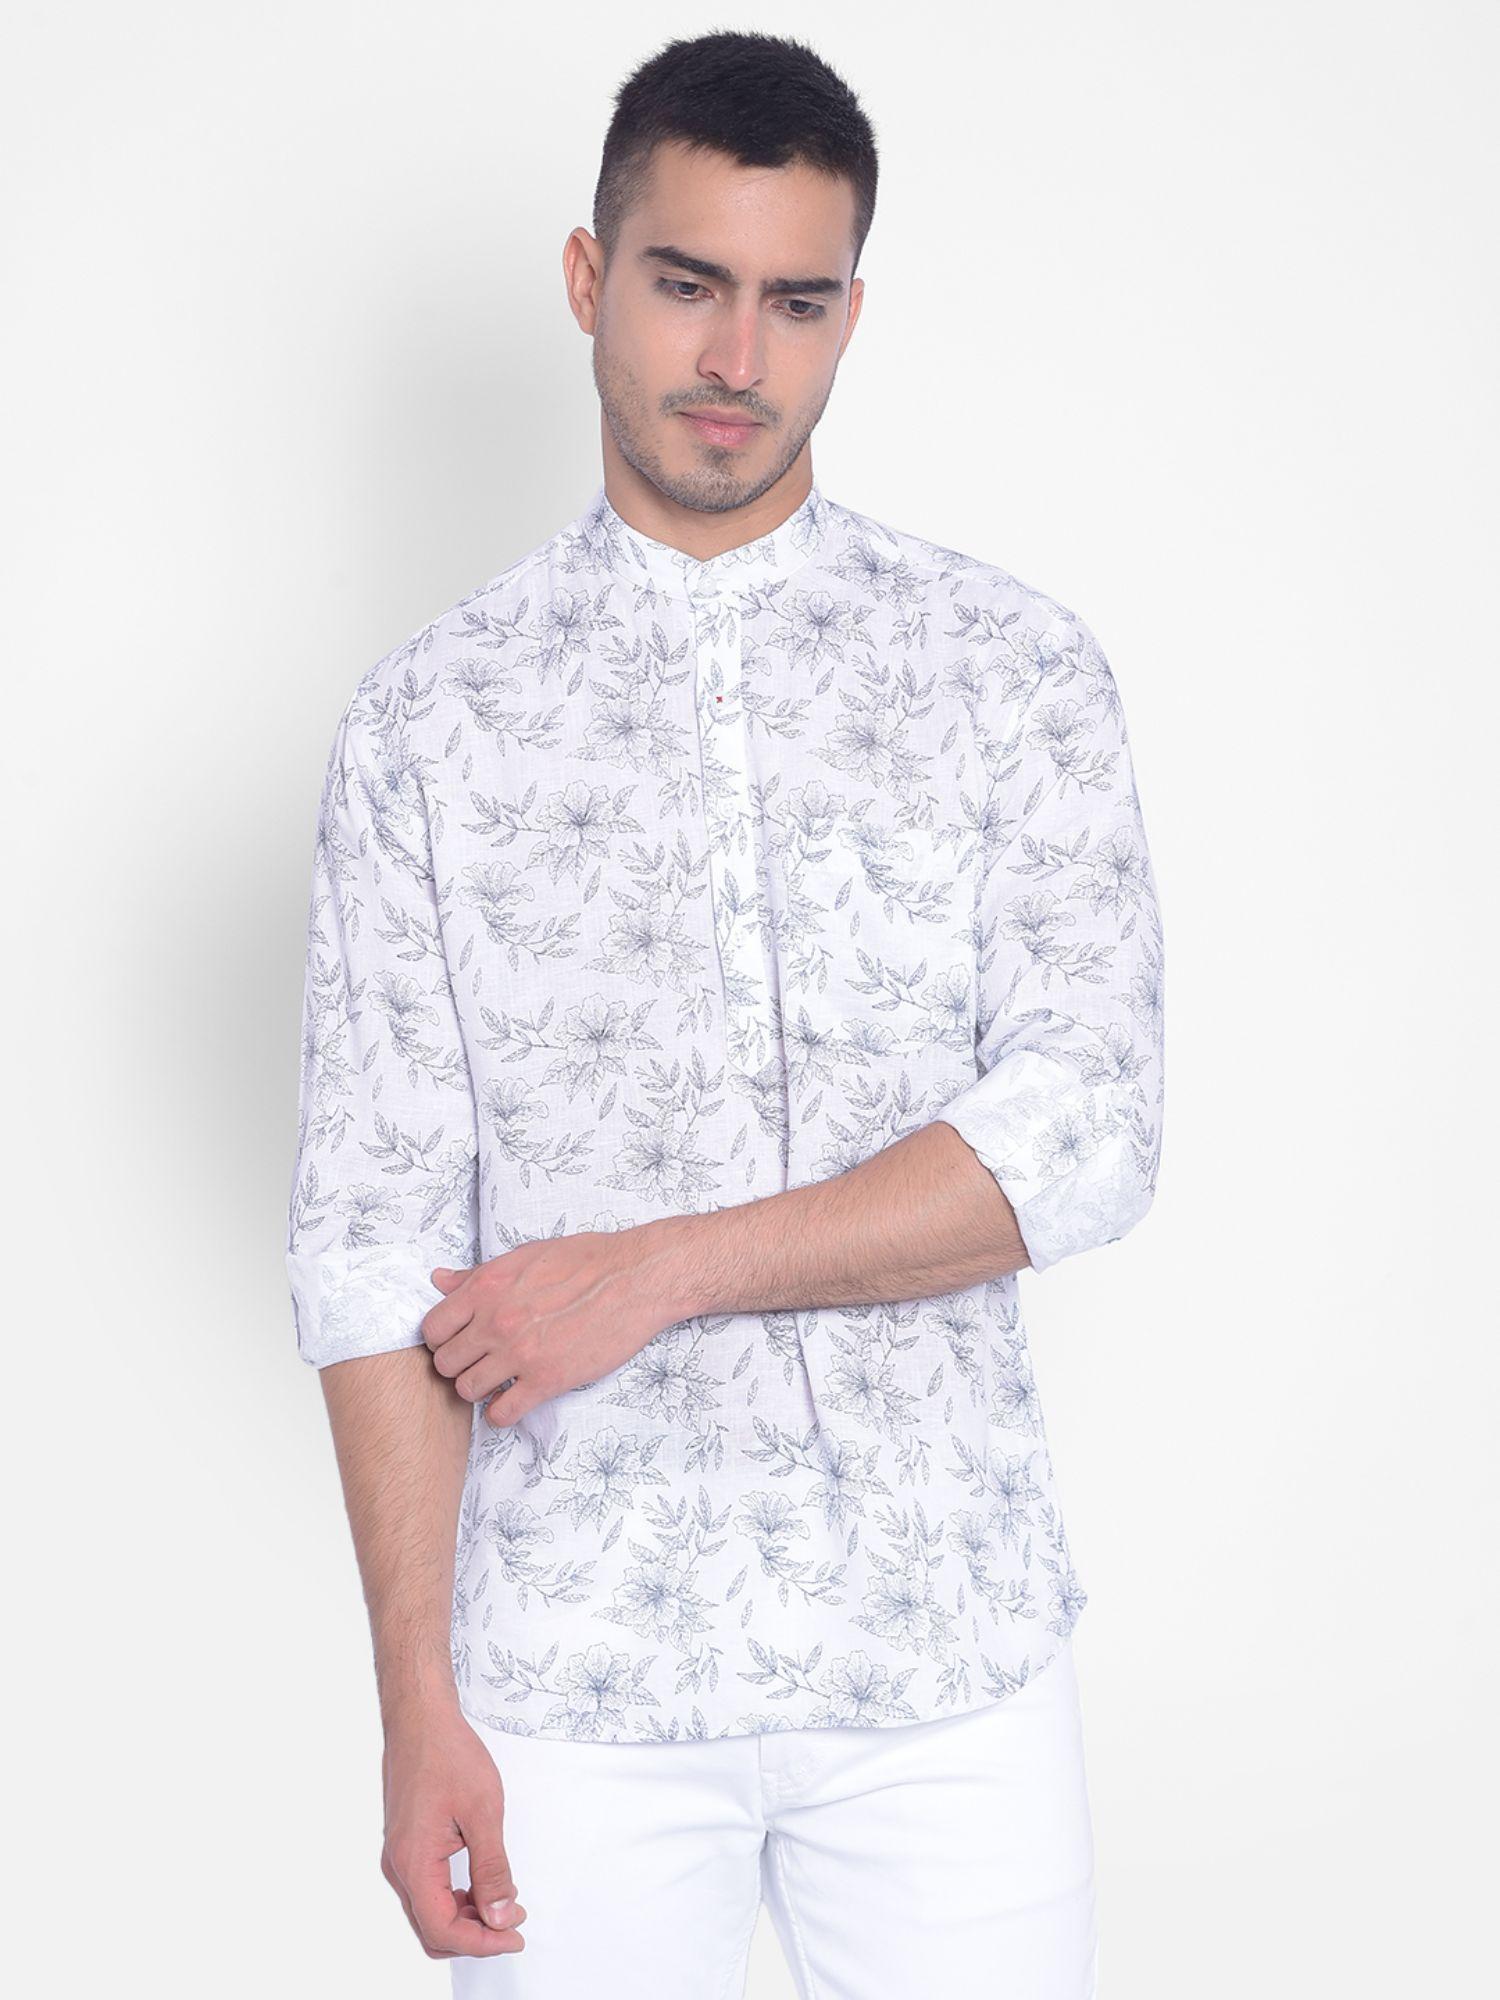 men's white floral shirt